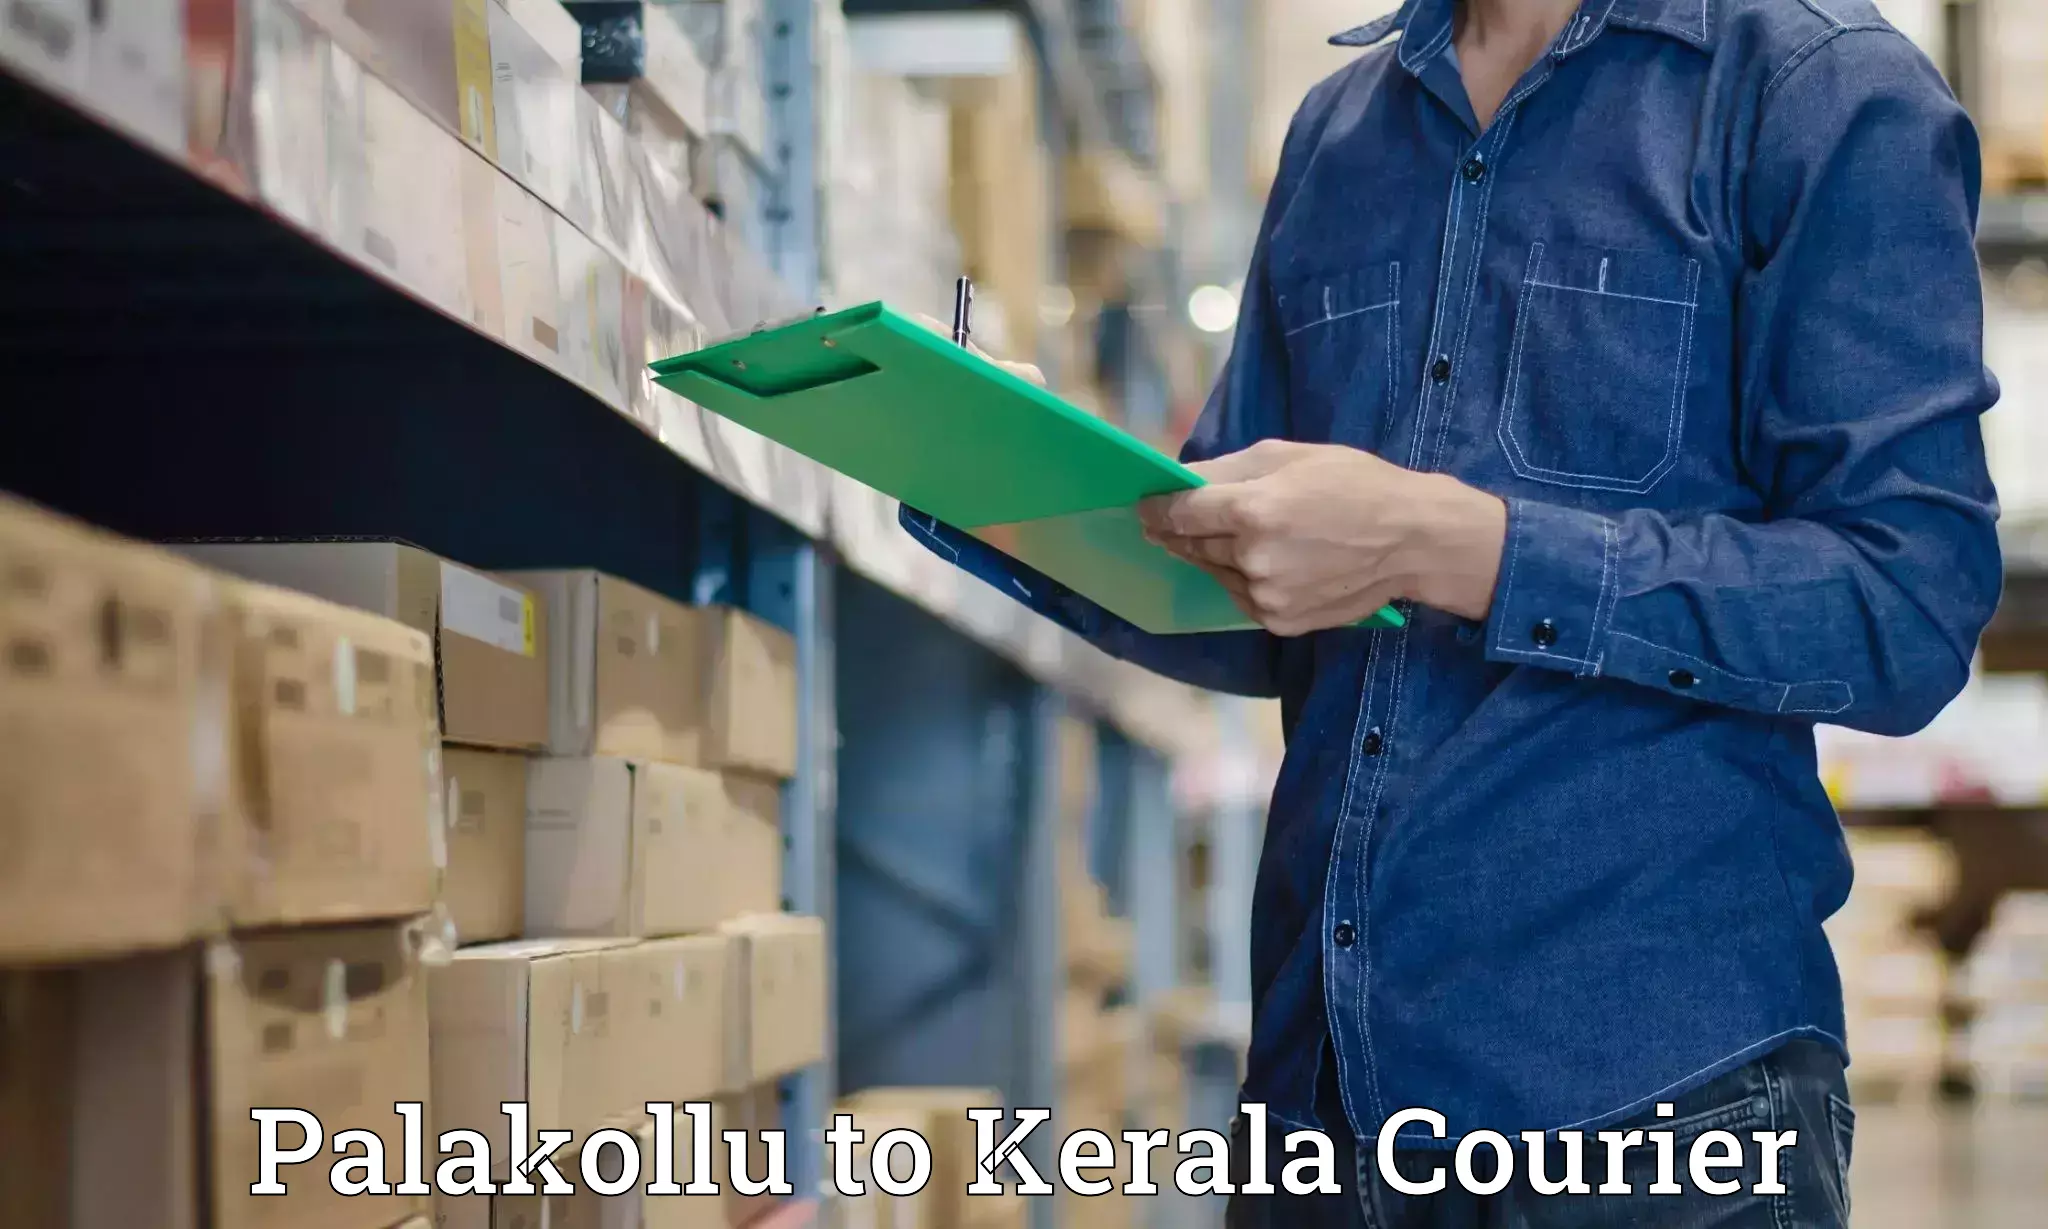 State-of-the-art courier technology Palakollu to Kerala